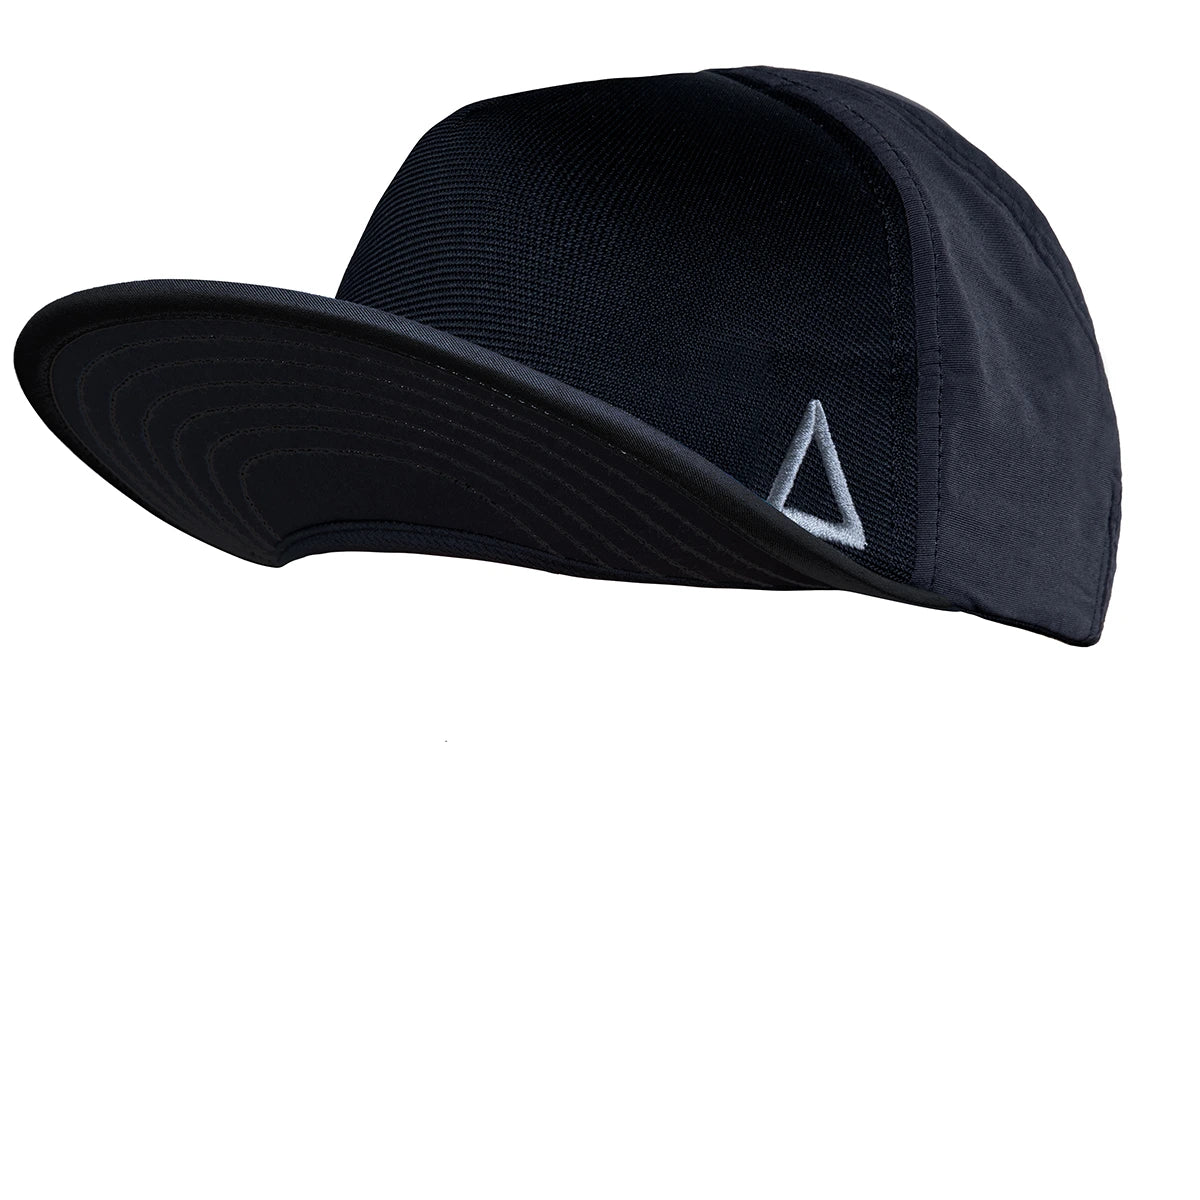 Kaiola Surf Hat Pure Black New Design Flip Up